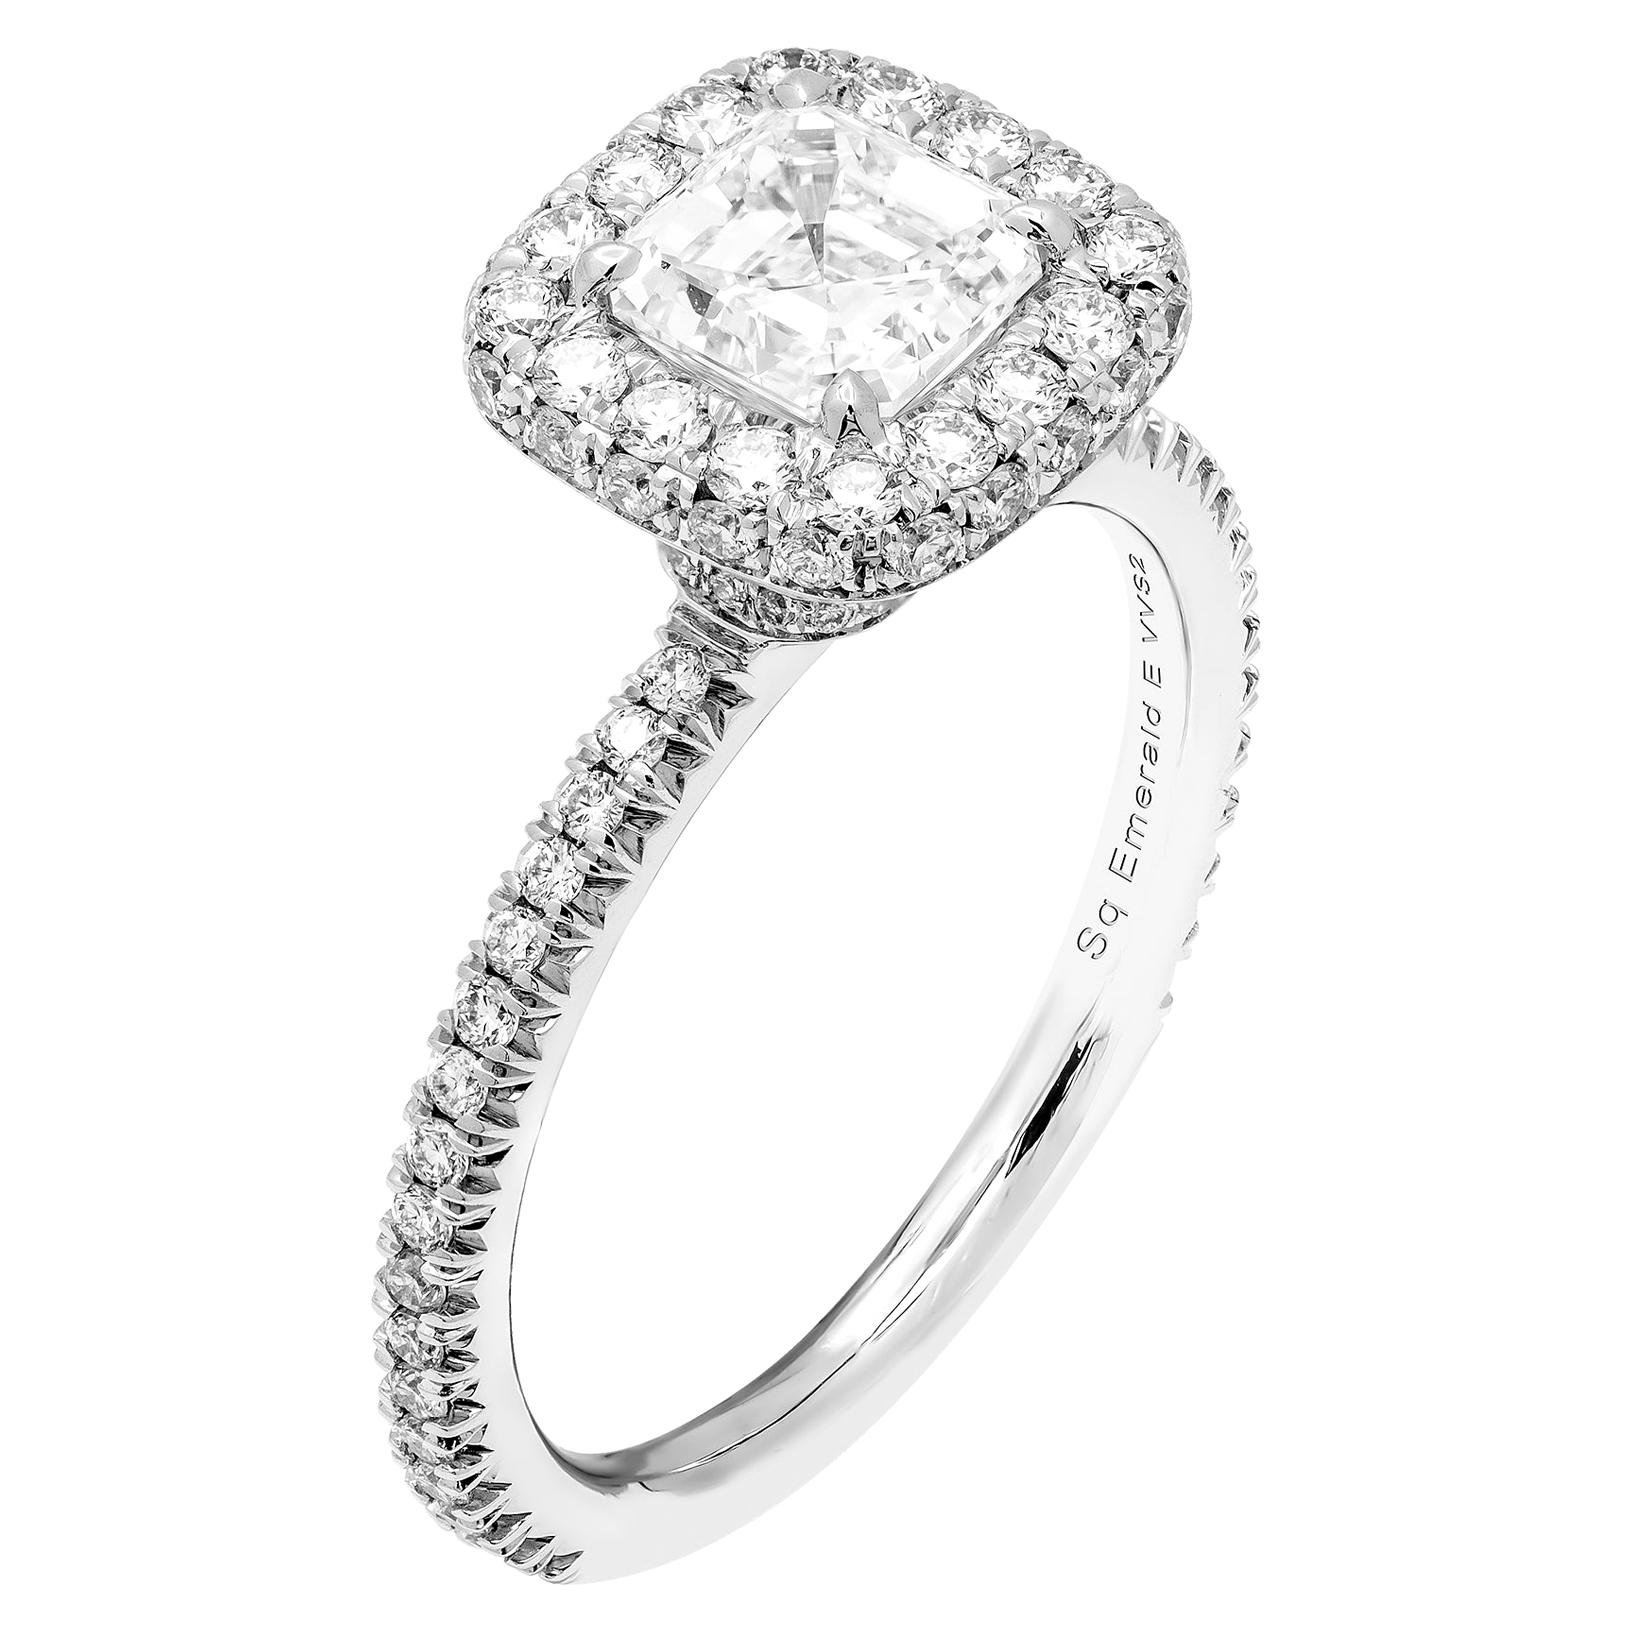 GIA Certified Engagement Ring with Asscher Cut Diamond 1.05 Carat